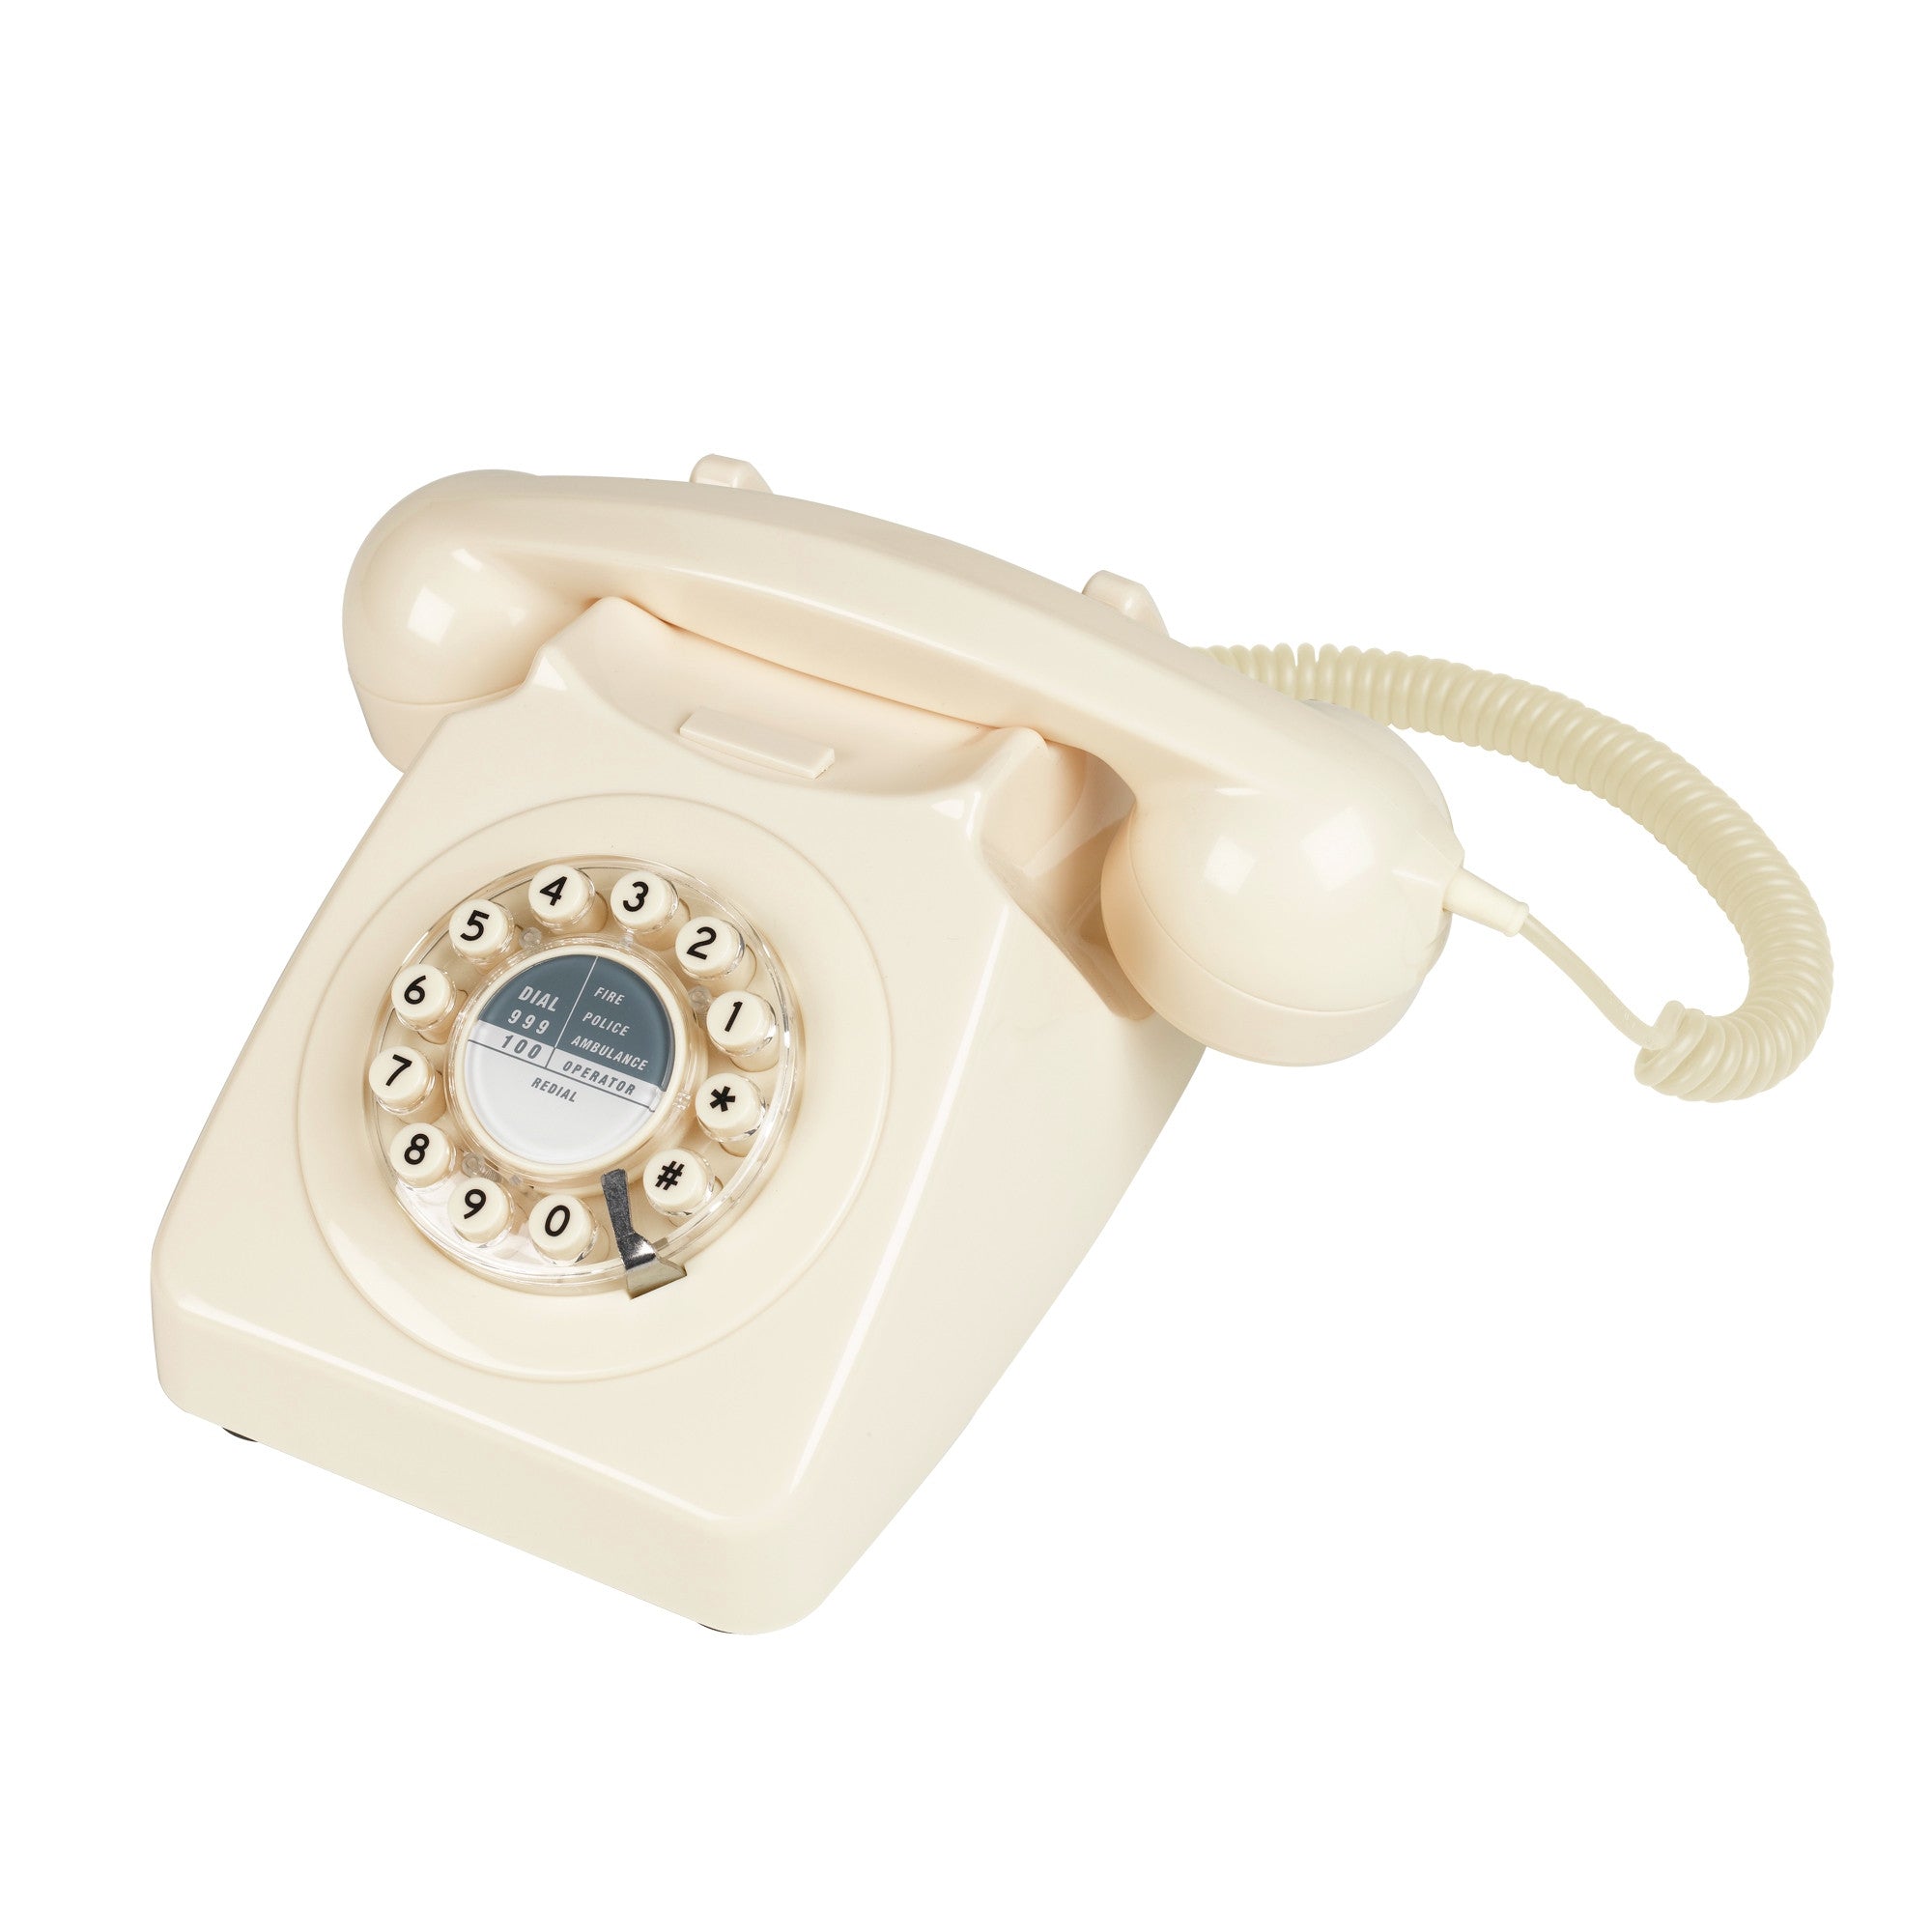 746 Replica Phone 1960s Classic Design Telephone Ooh La La Factory